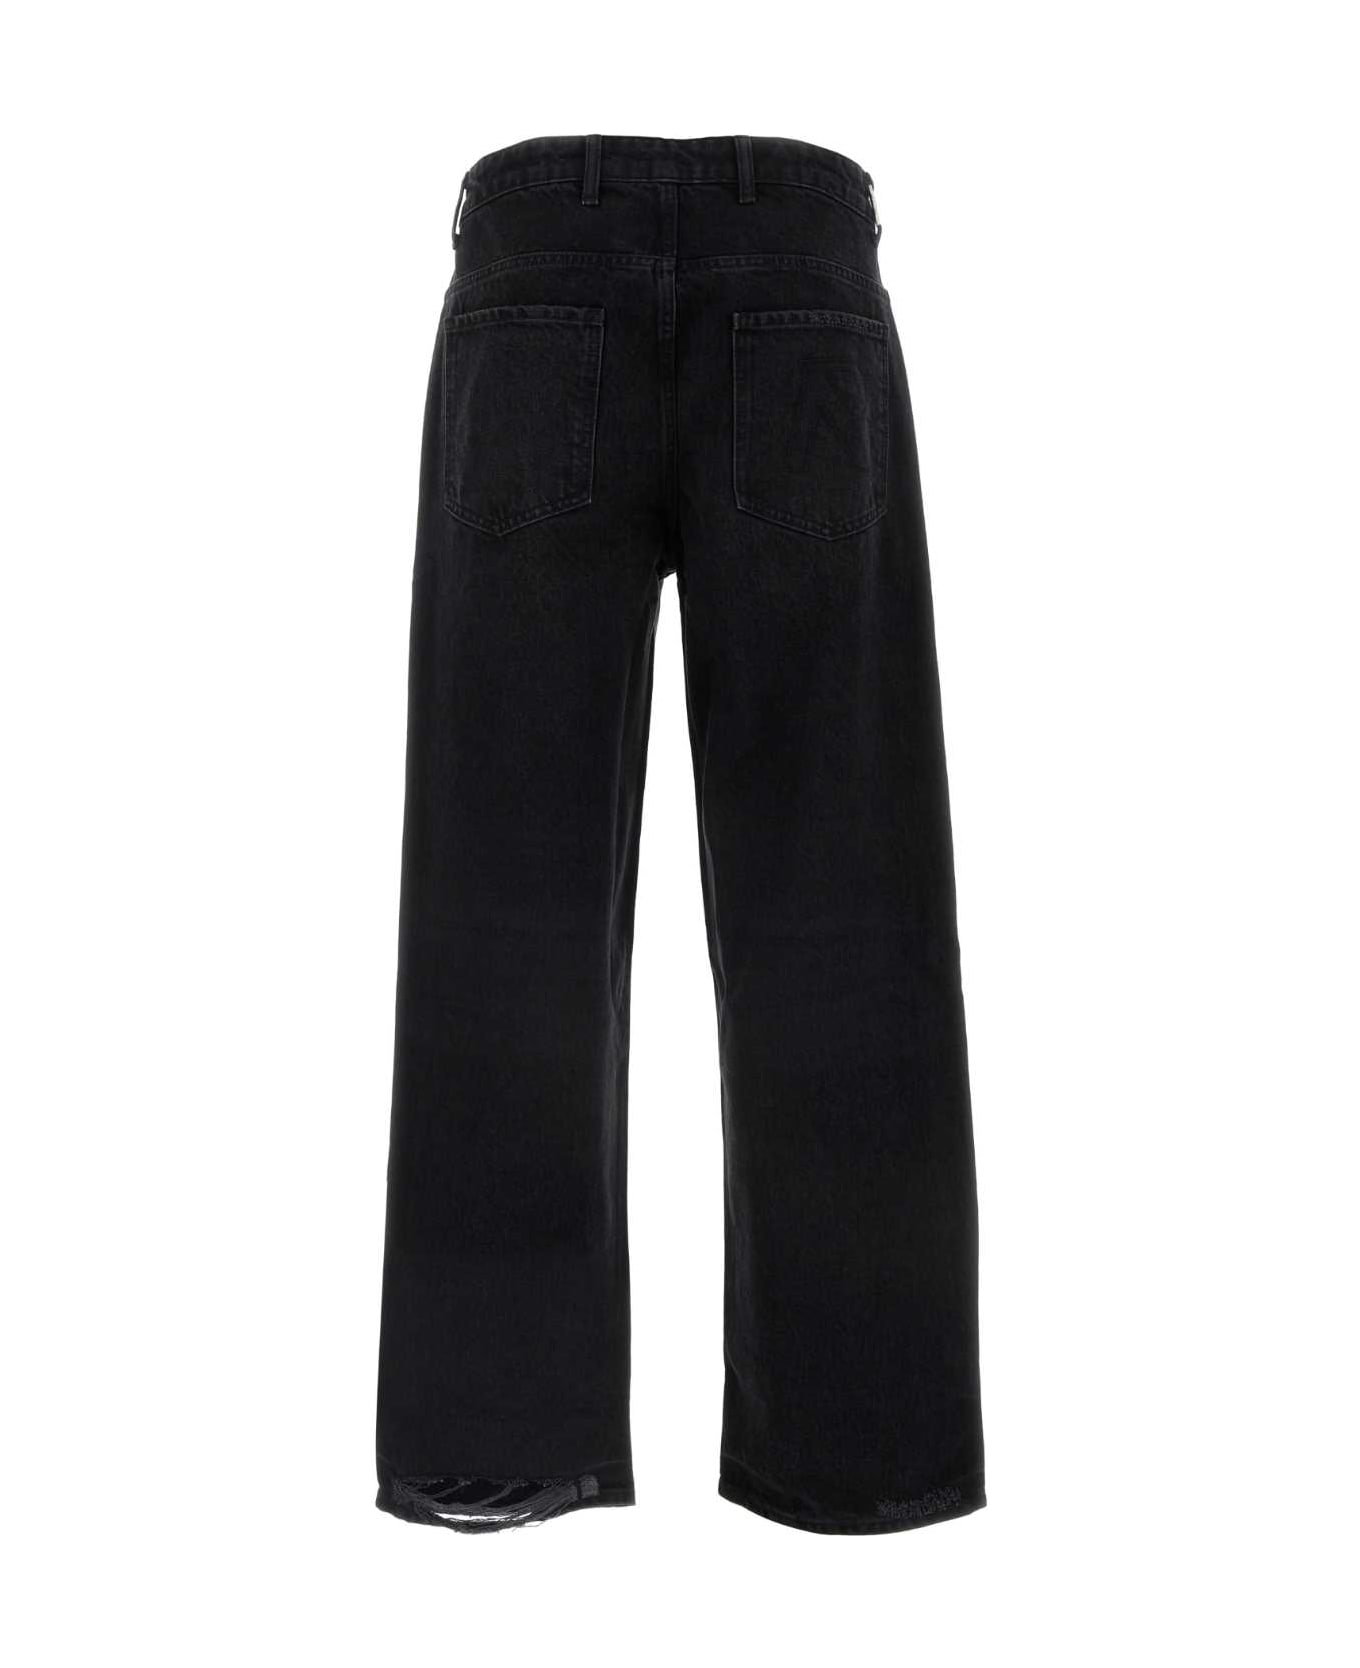 REPRESENT Black Denim Jeans - BLACK